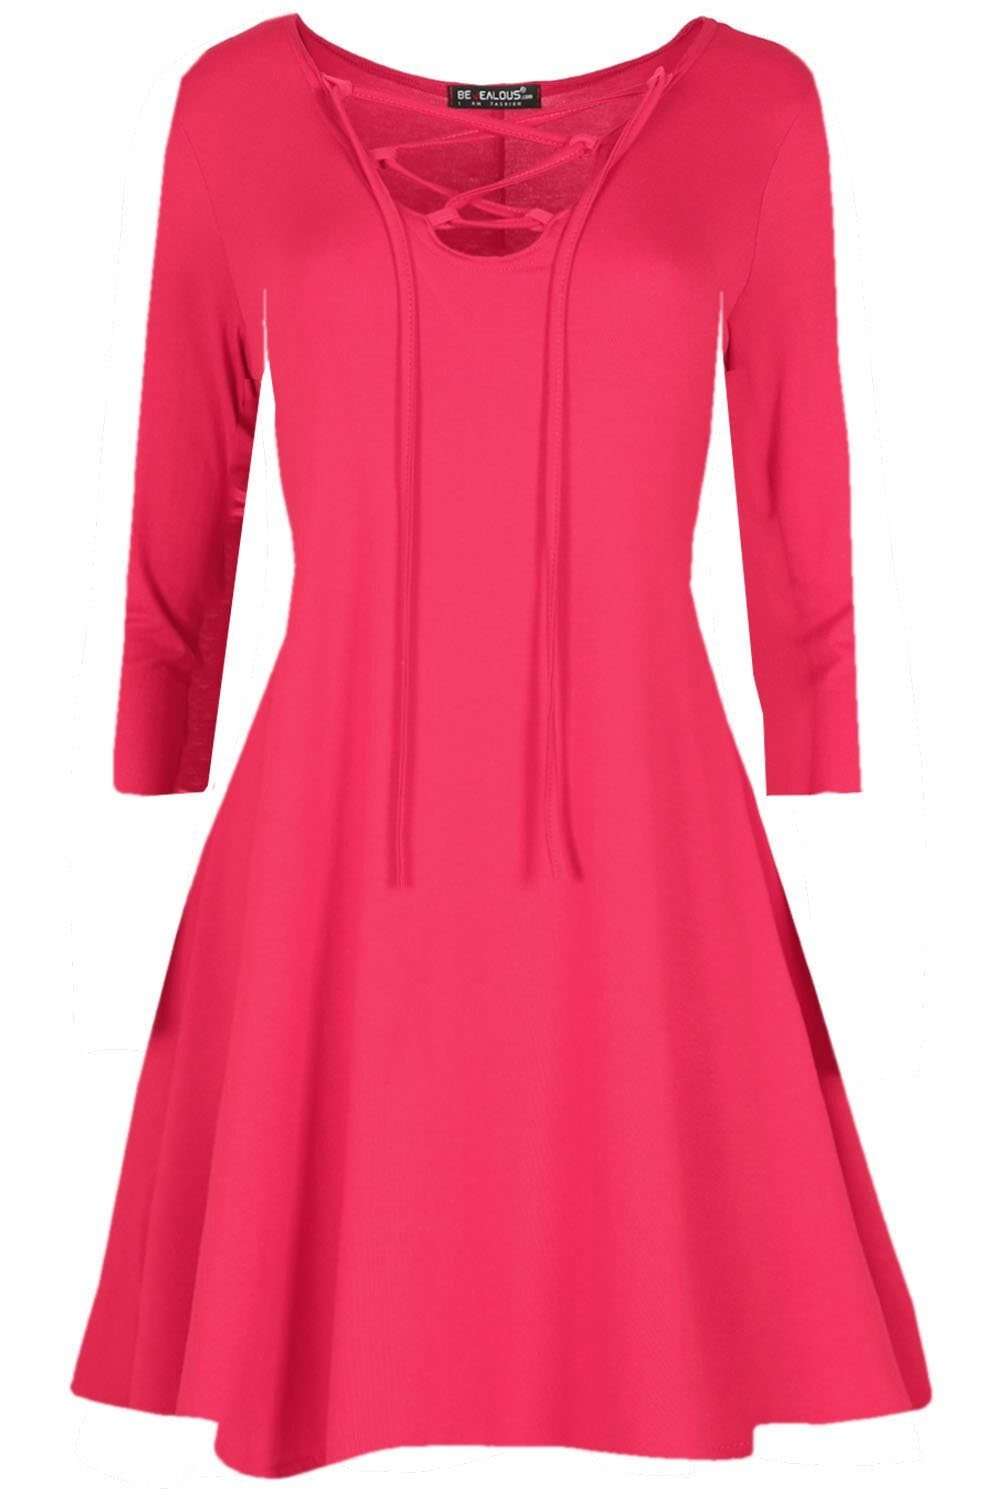 Red Long Sleeve Basic Lace Up Mini Swing Dress - bejealous-com